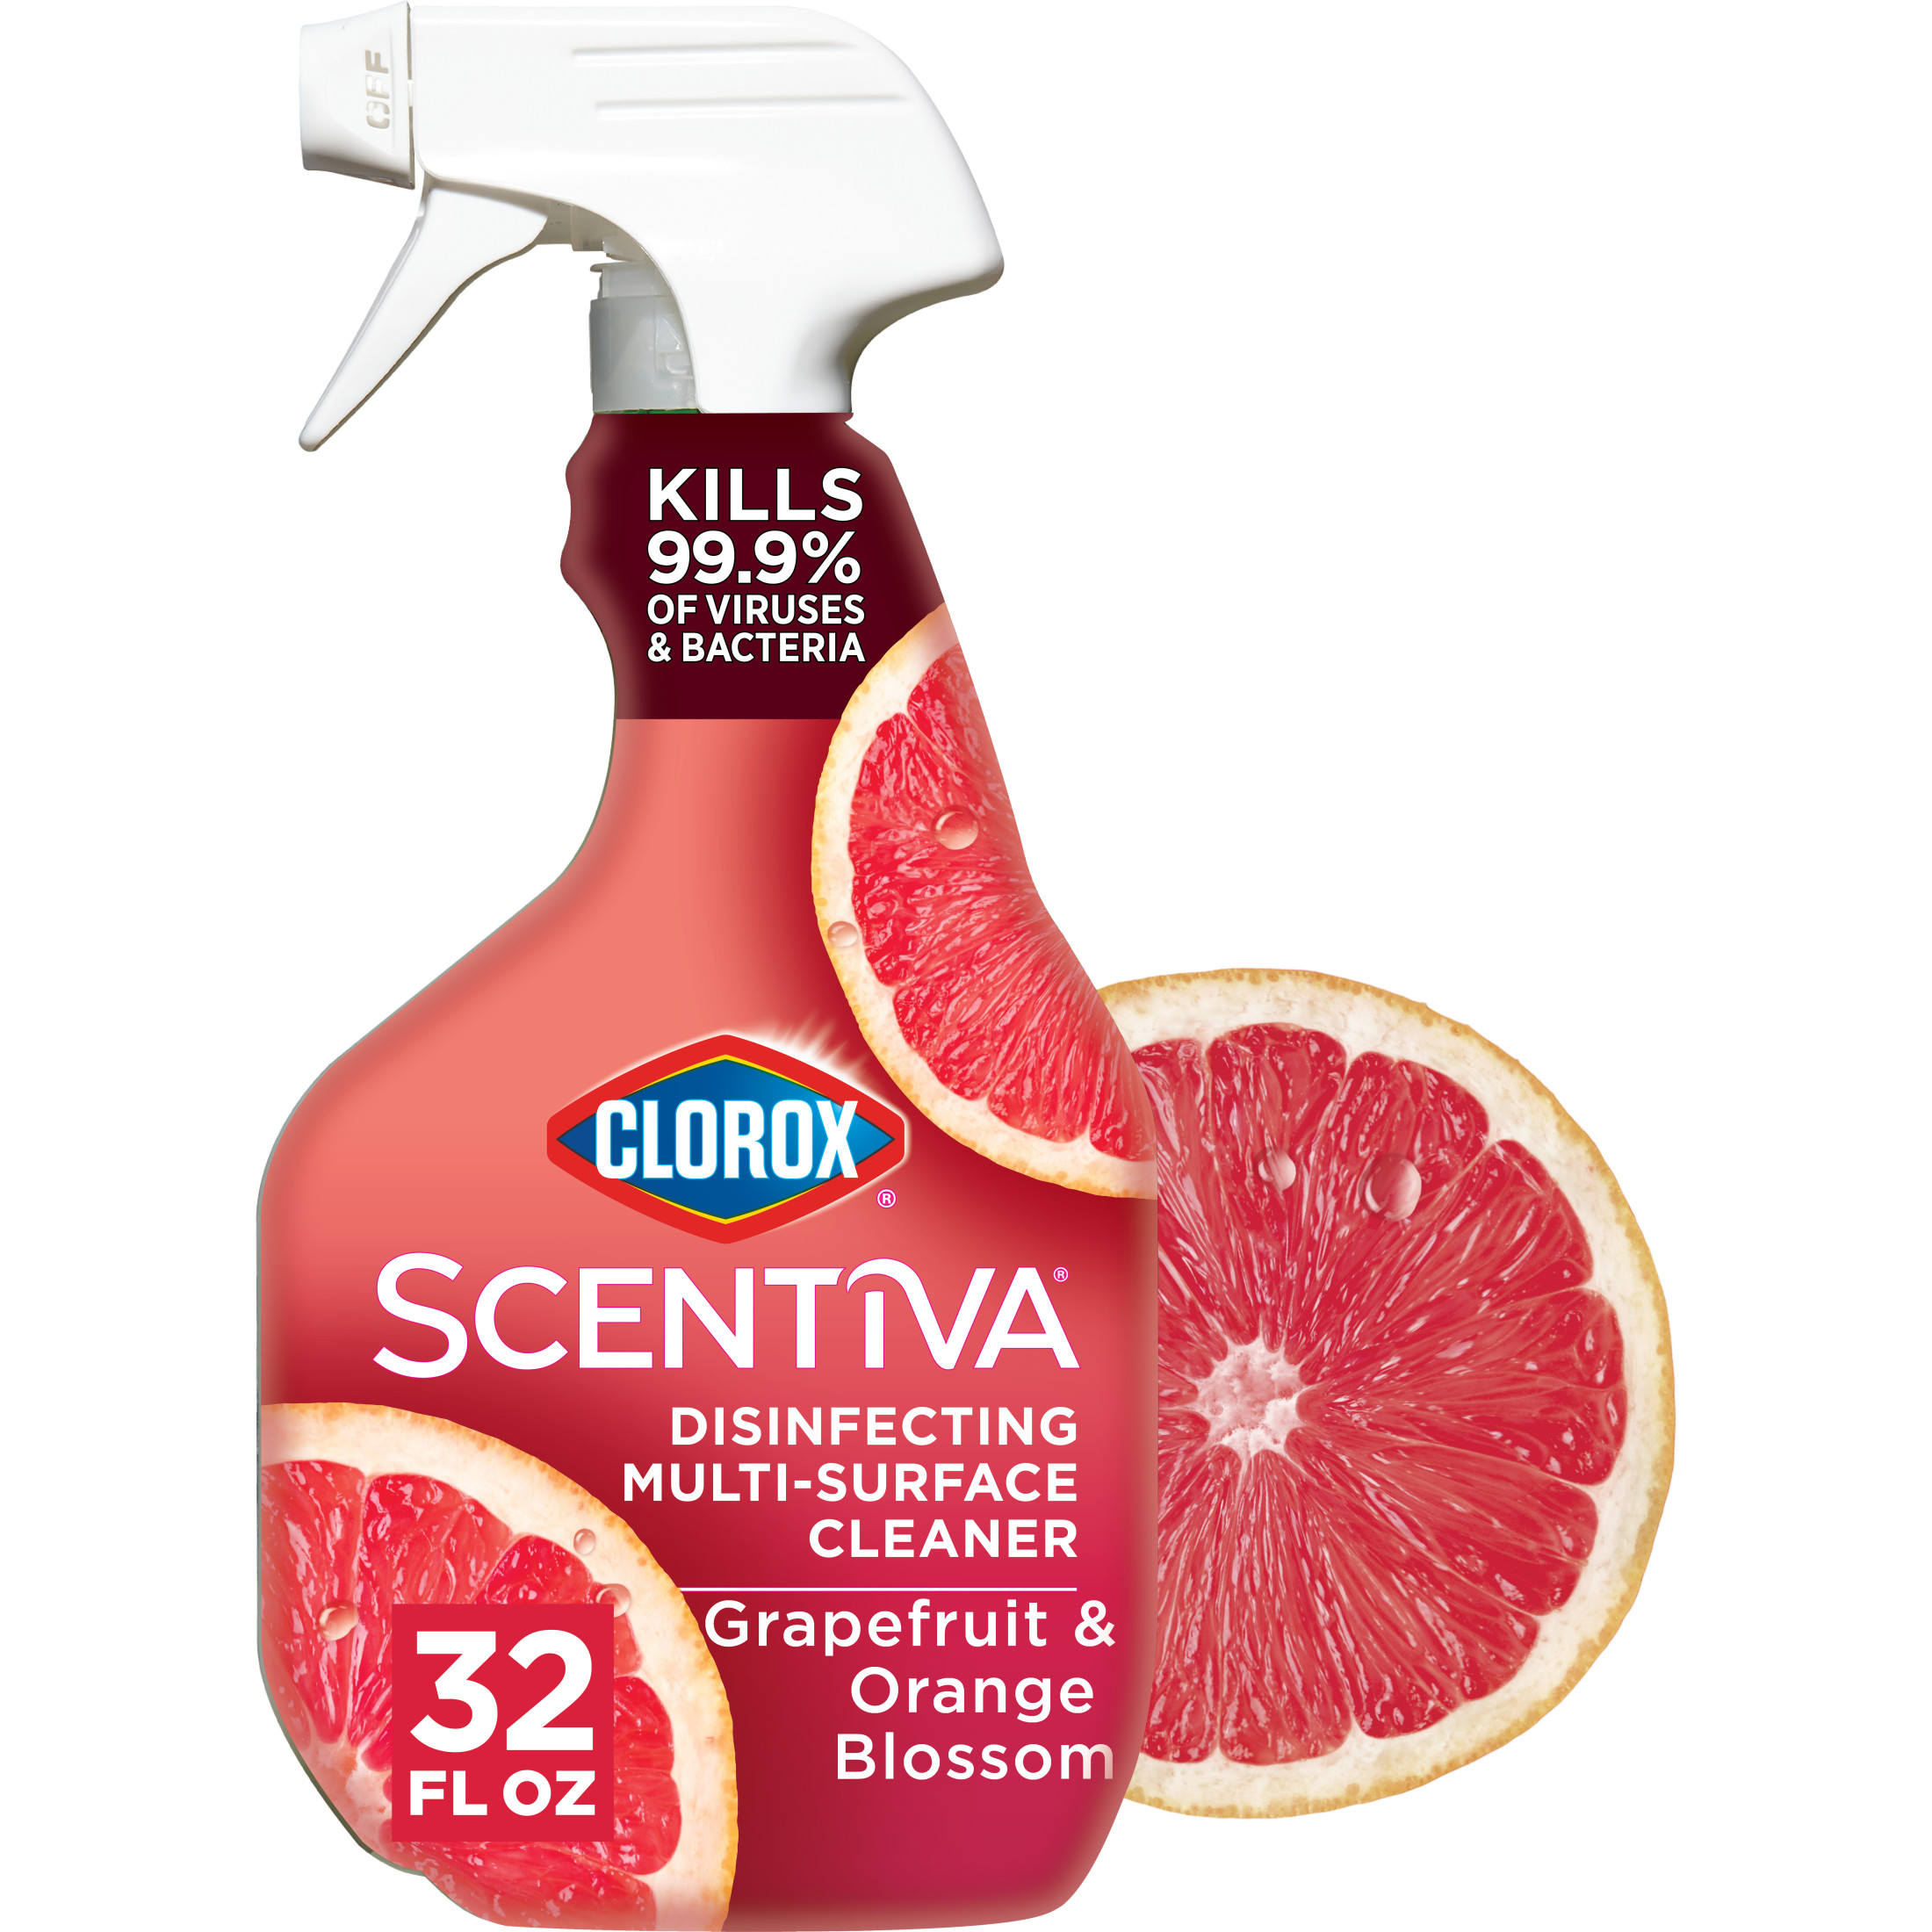 Clorox Scentiva Bleach-Free Multi-Surface Cleaner Spray, Grapefruit & Orange Blossom, 32 fl oz - image 1 of 10